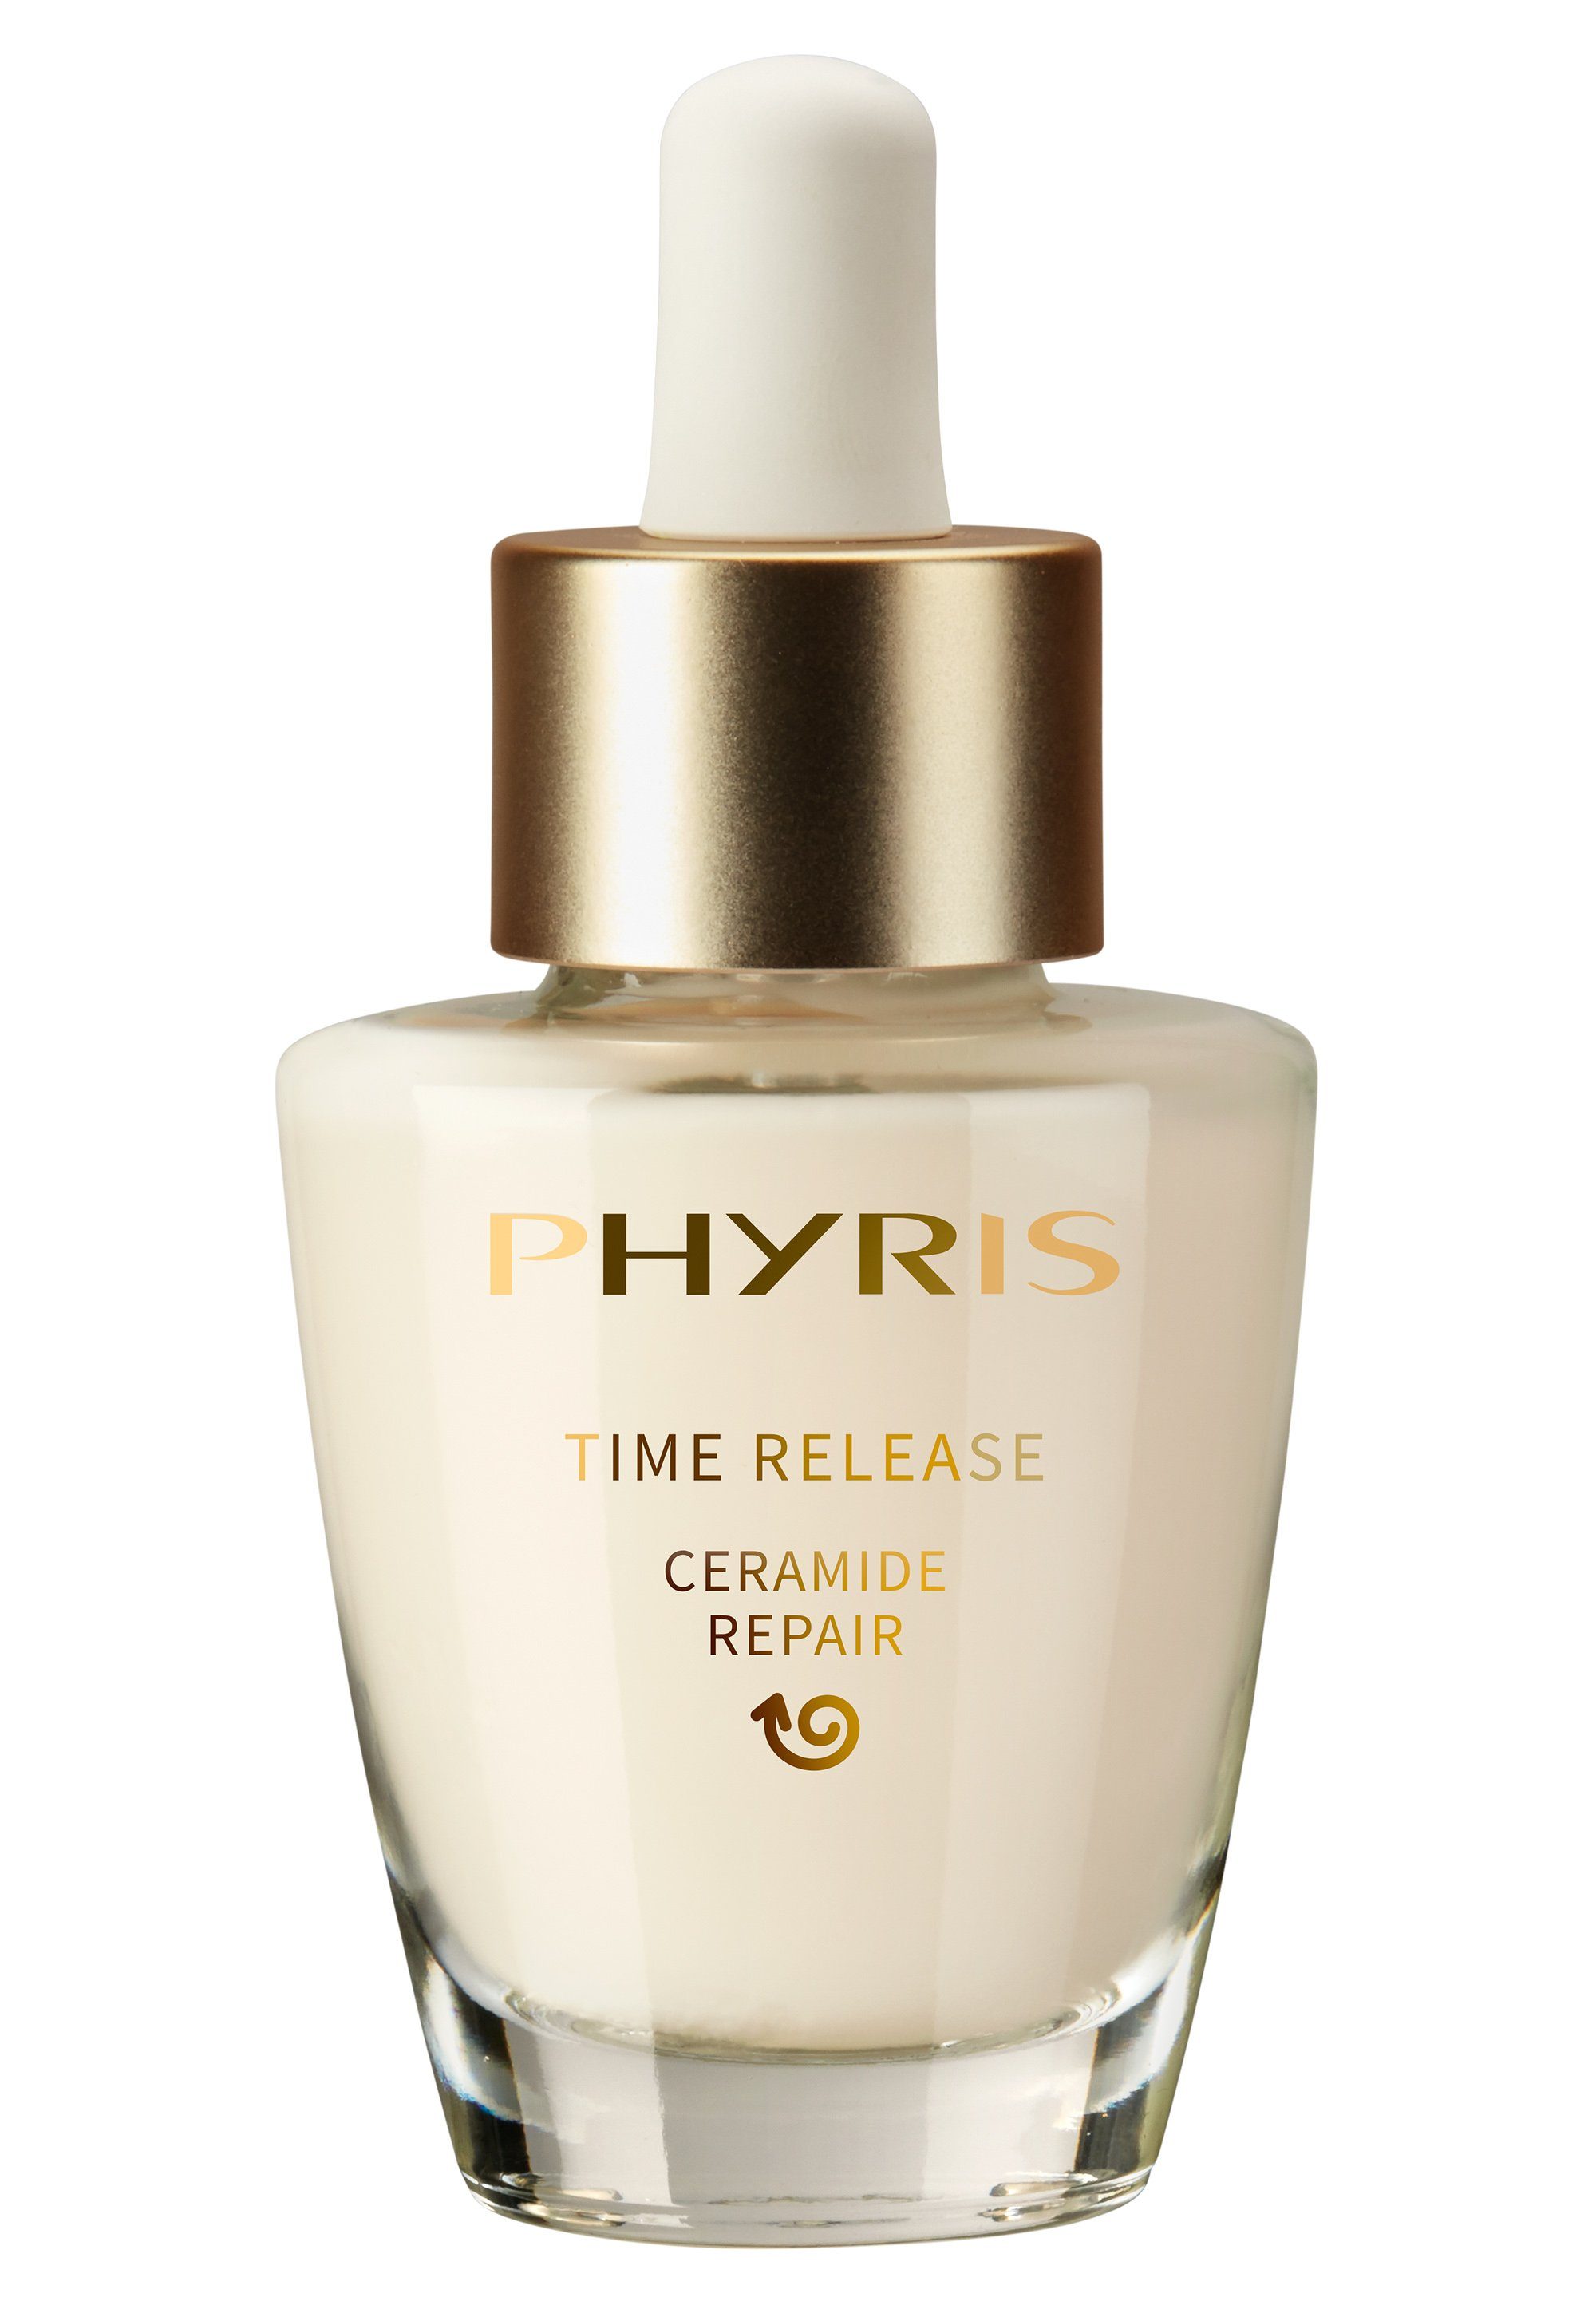 PHYRIS Gesichtsfluid Time Release Ceramide Repair, mit 30 ml Inhalt